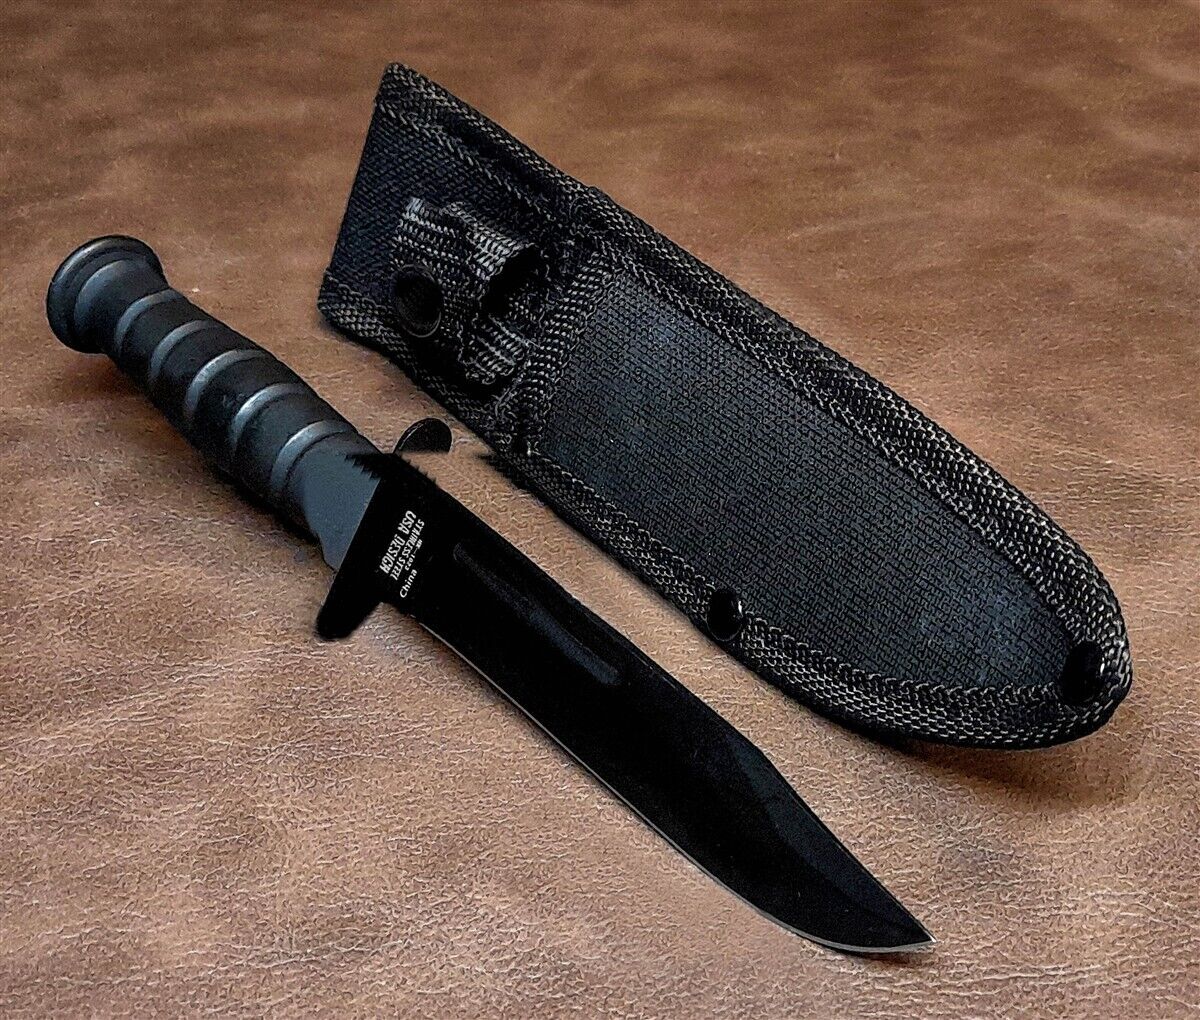 Mini Combat Military Fixed Blade, Full-tang Bowie knife w/Sheath